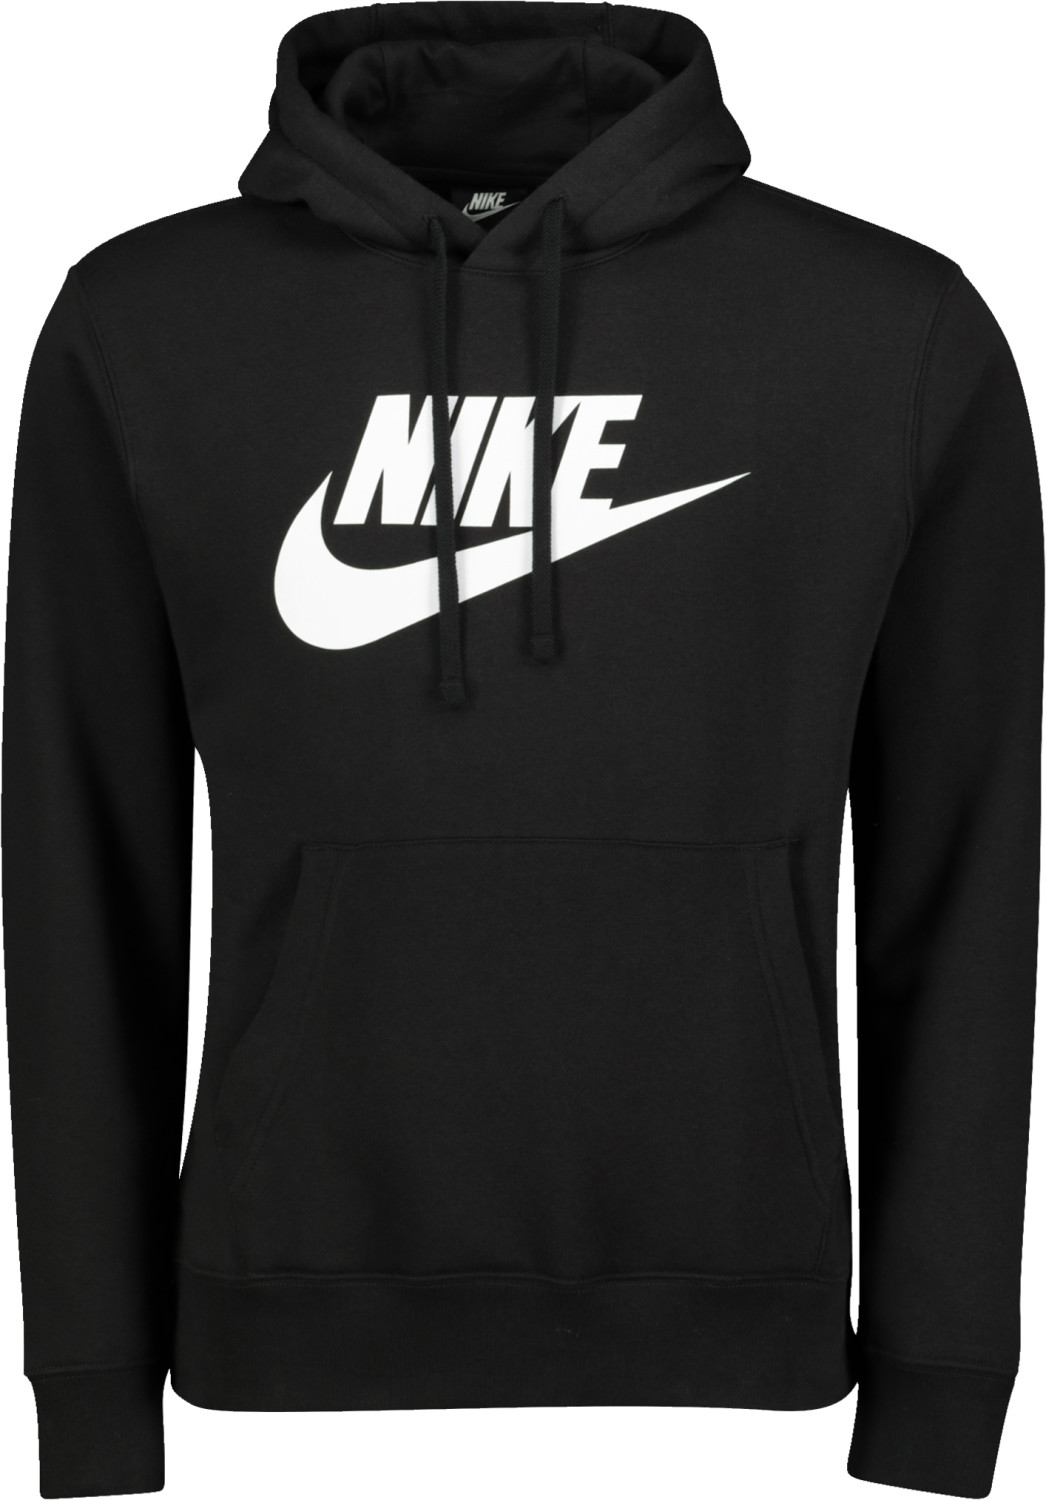 Buy Nike Club Fleece black (BV2973) from £24.89 (Today) – Best Deals on ...